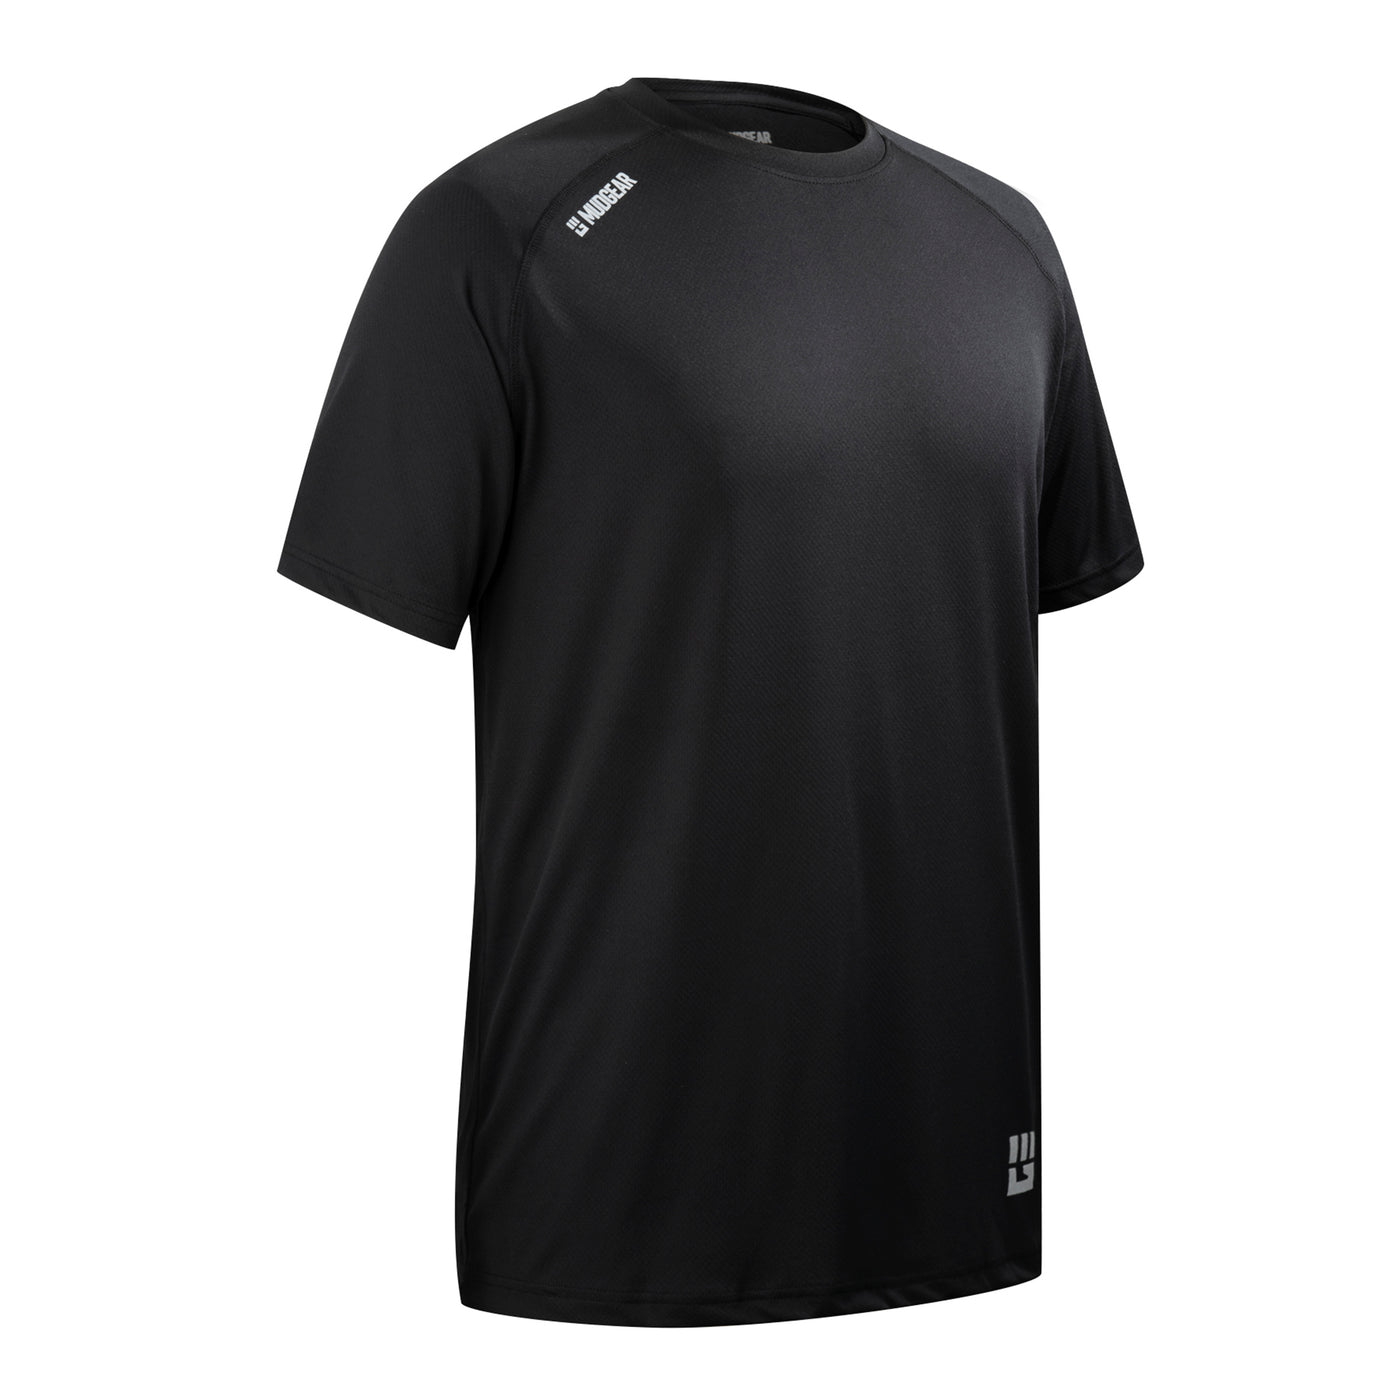 MudGear Men's Loose Fitted Performance Shirt VX Black